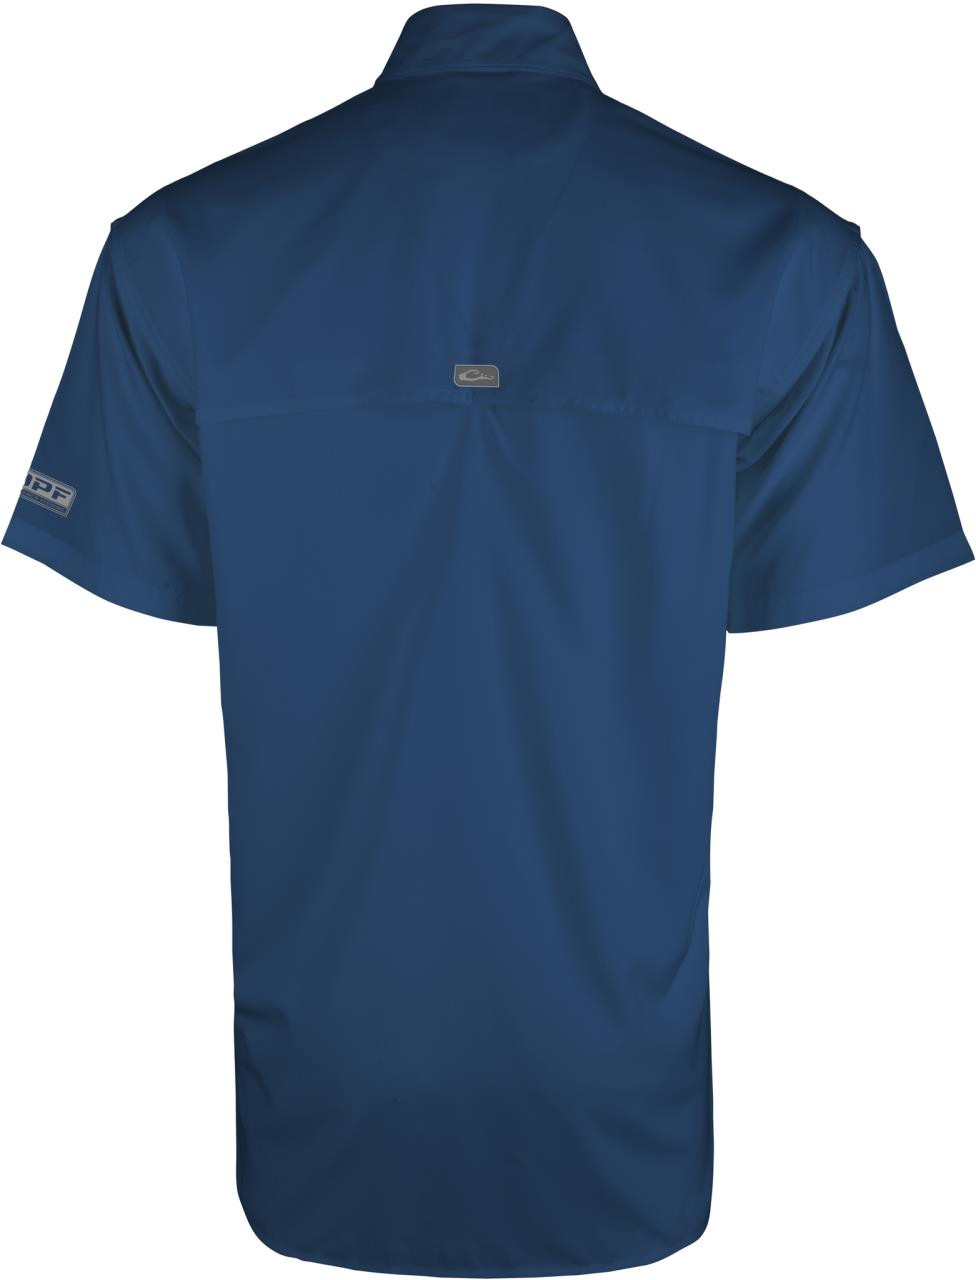 Drake Performance Fishing Shirt Large Blue DPF Vented Short Sleeve